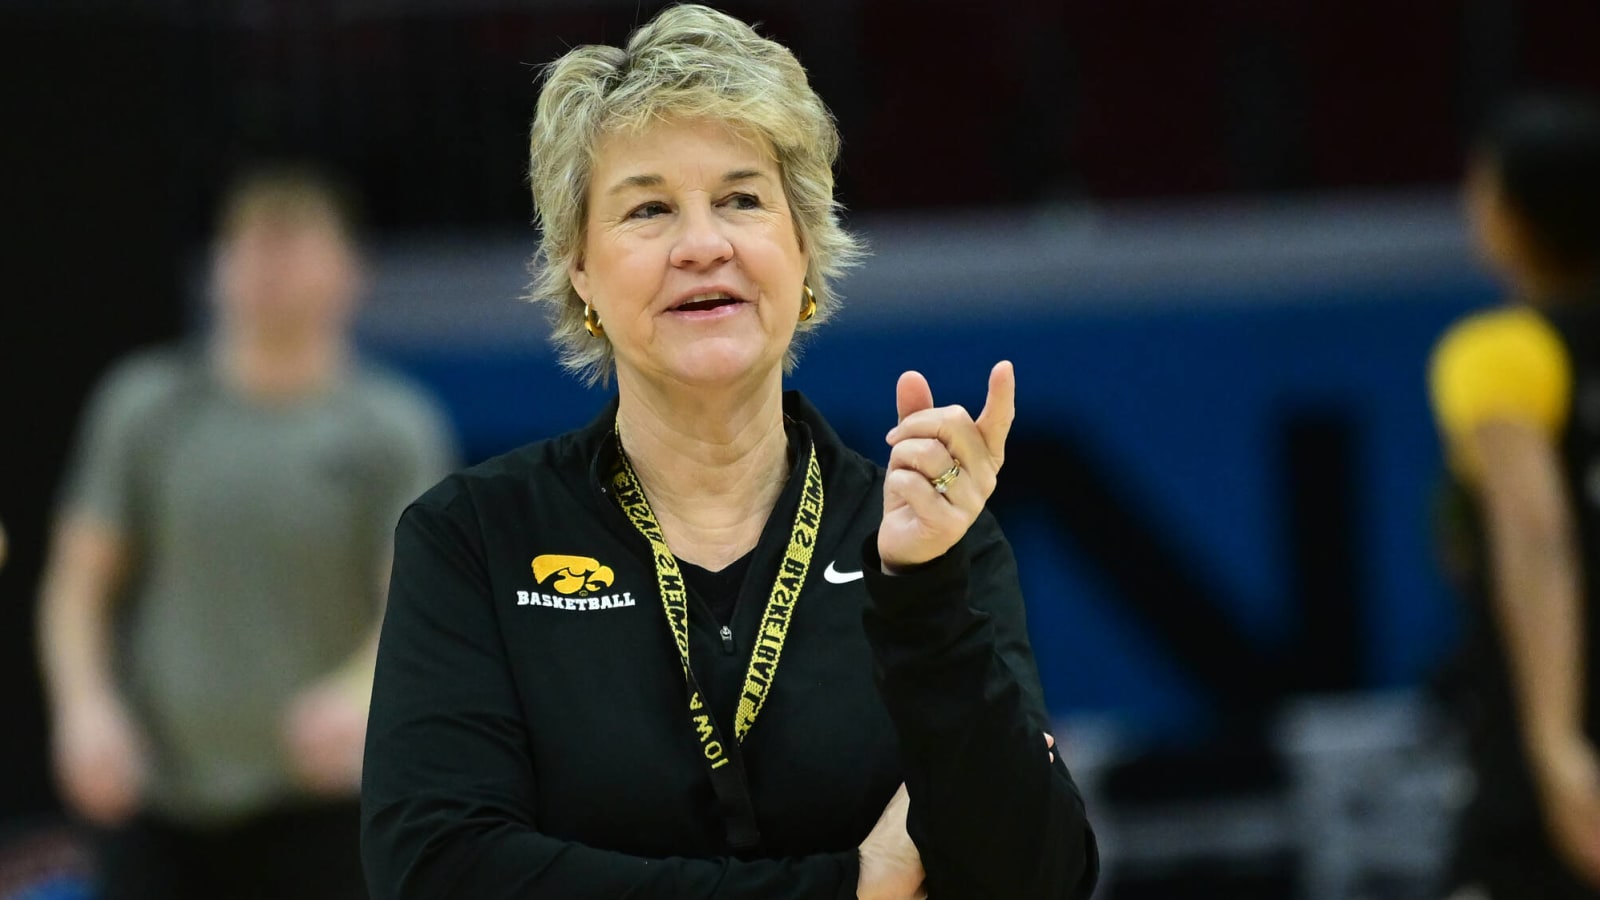 Longtime Iowa women's basketball coach Lisa Bluder retires